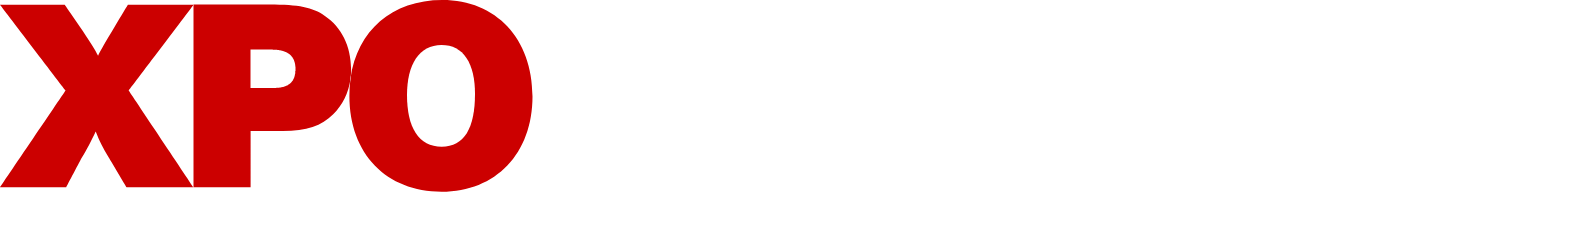 XPO Logistics logo large for dark backgrounds (transparent PNG)